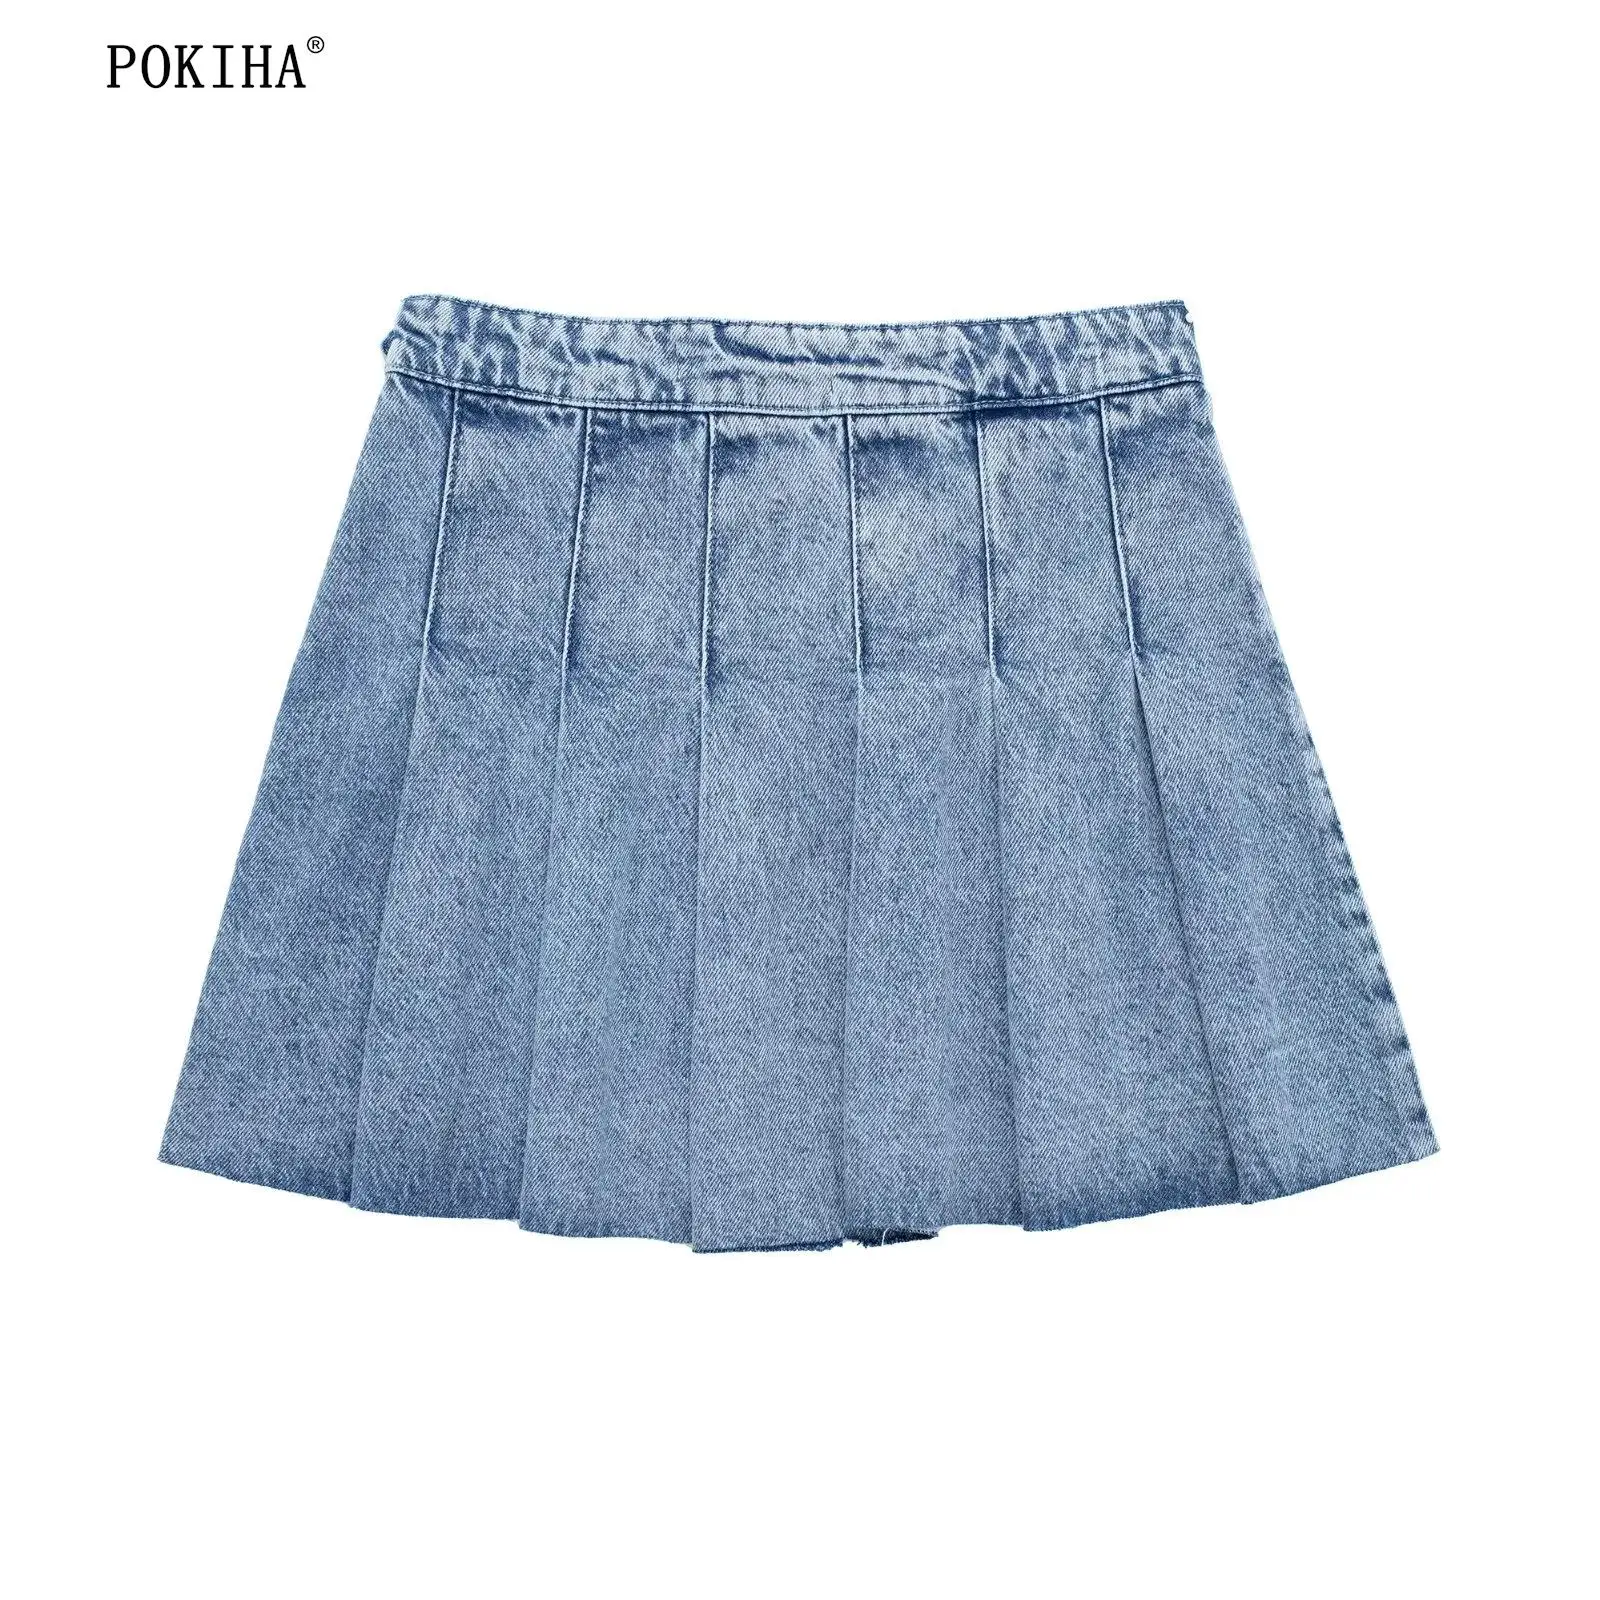 Poki Mini Skirts for Sale